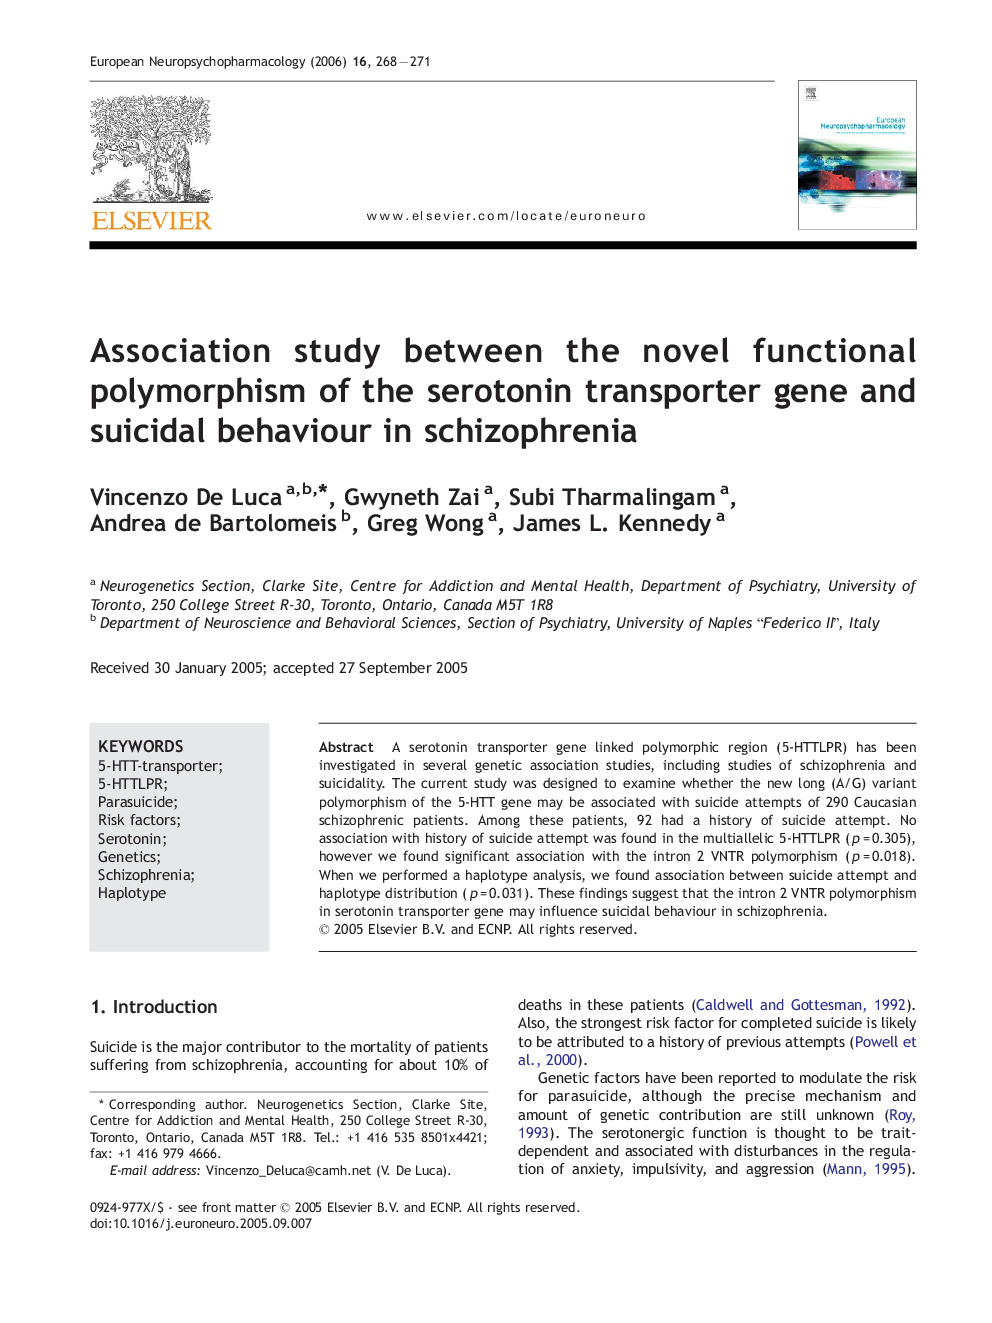 Association study between the novel functional polymorphism of the serotonin transporter gene and suicidal behaviour in schizophrenia